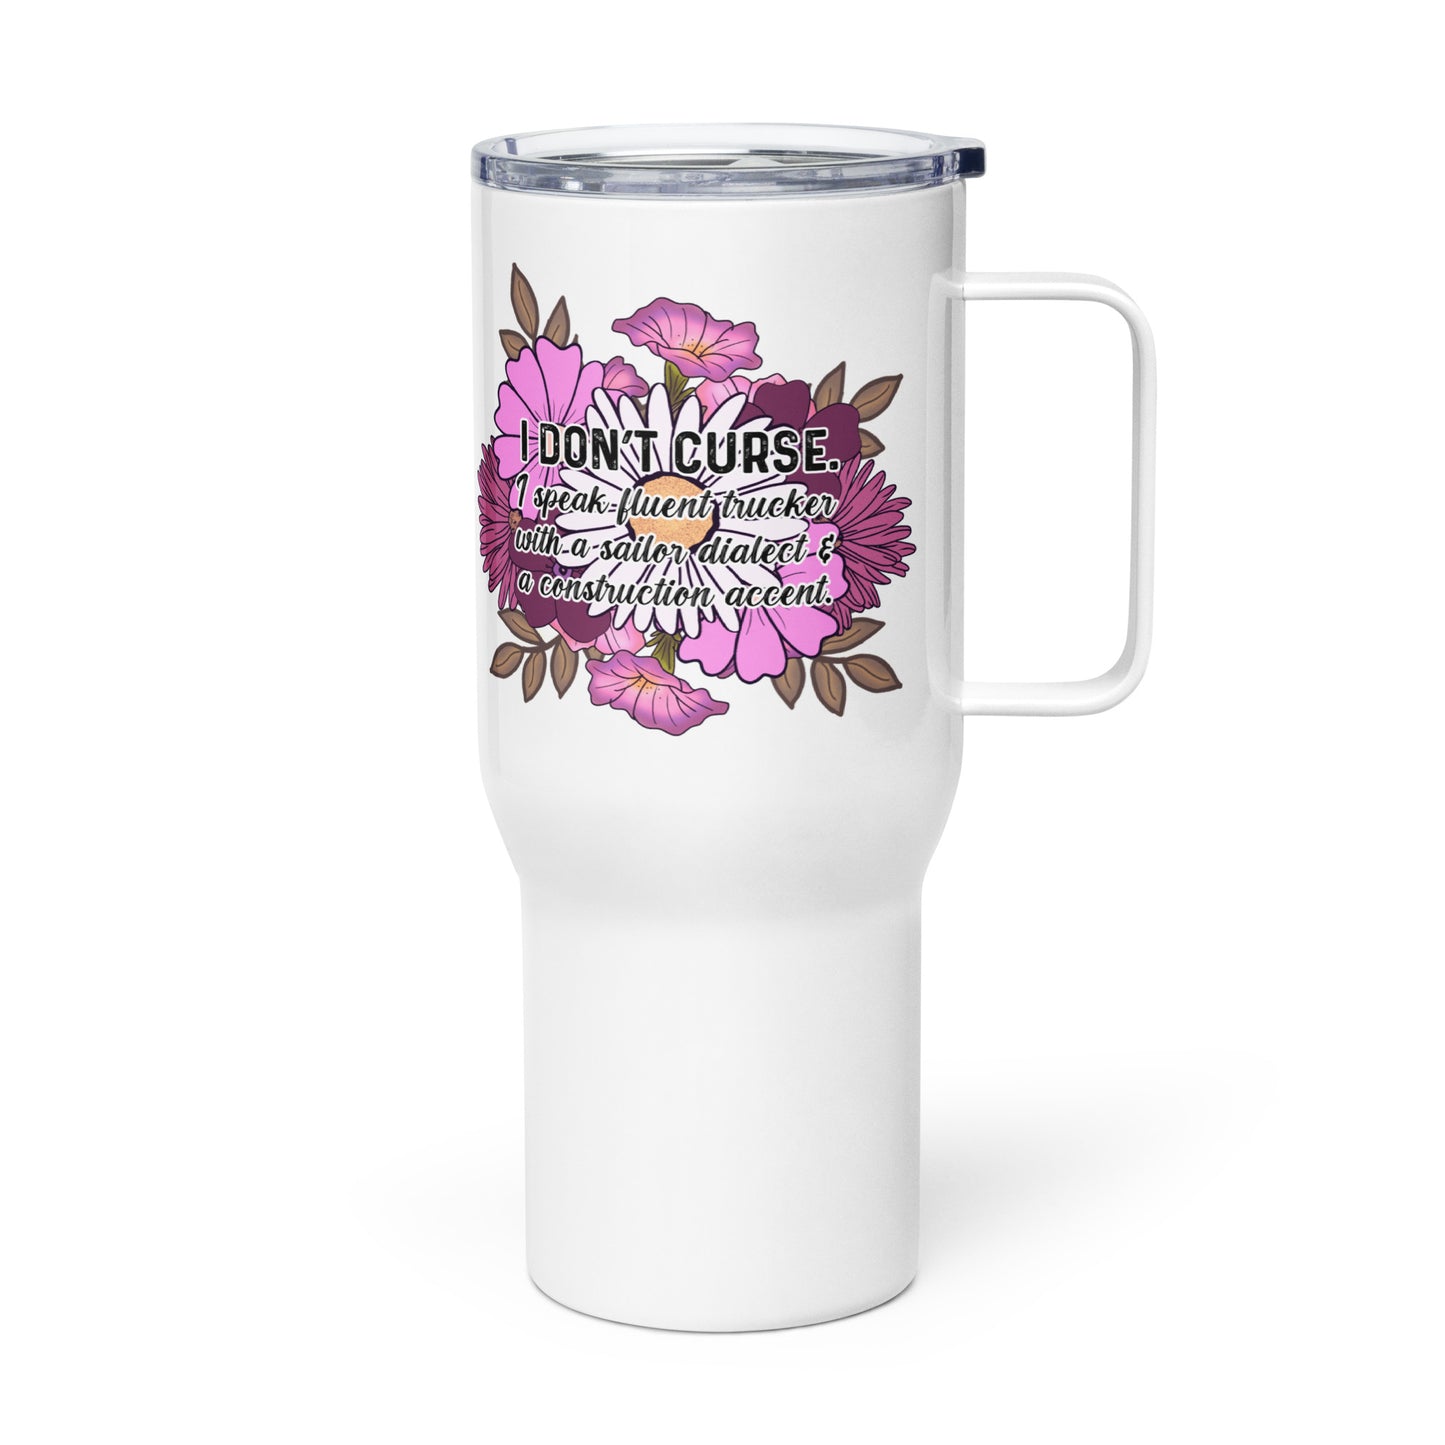 Travel mug with a handle- I don't curse